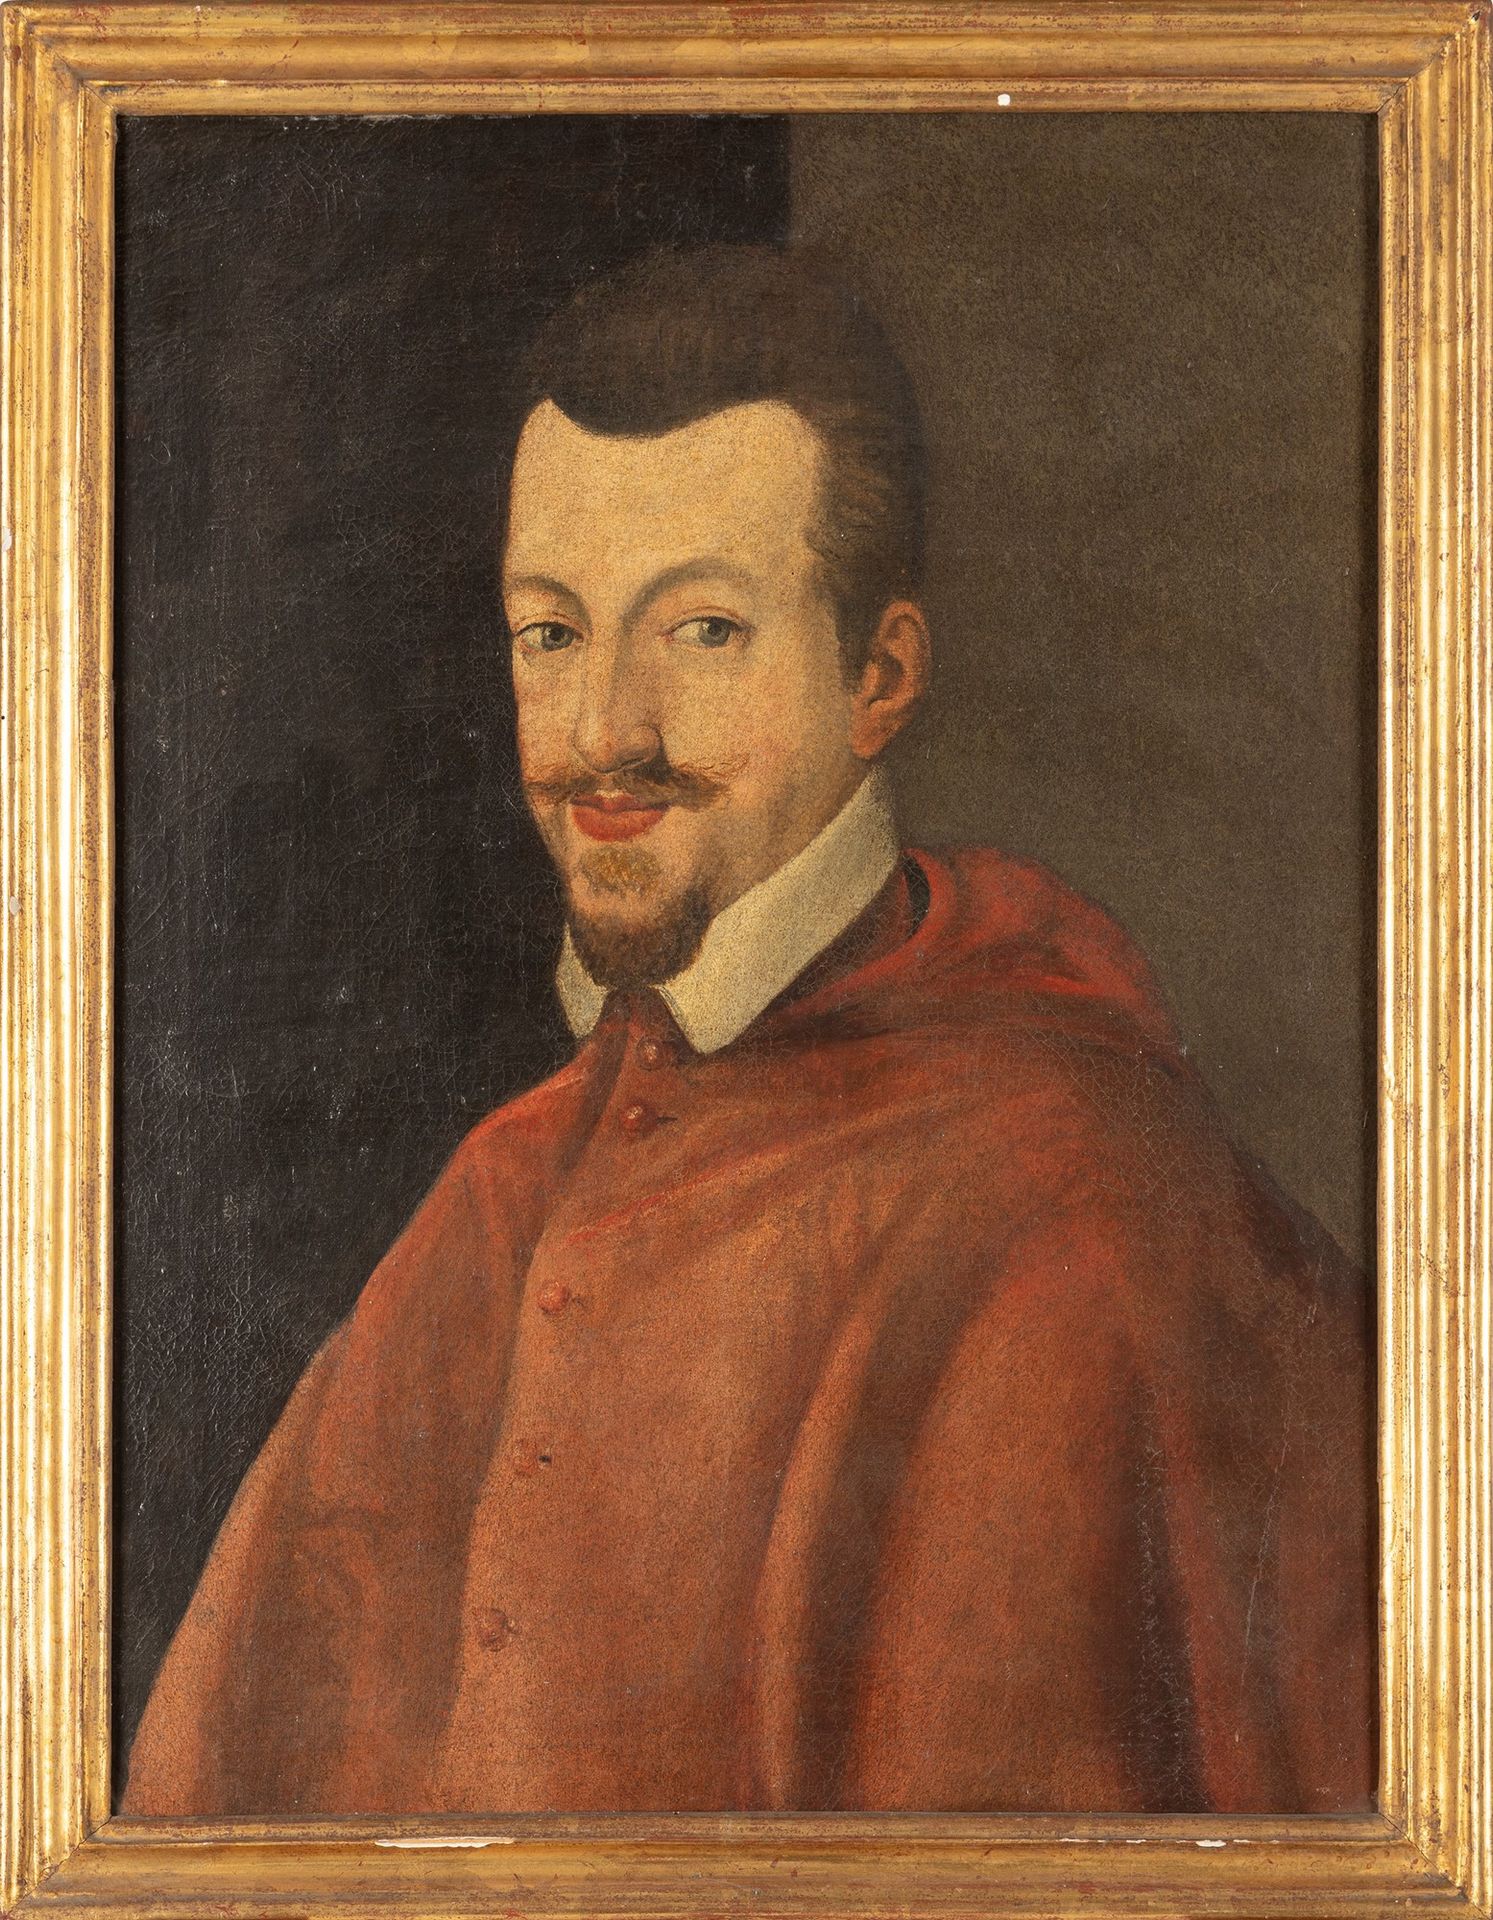 Scuola italiana, secolo XVIII 红衣主教的半身像

布面油画
68.5 x 50.5 cm
 

框架背面的数字标签：53